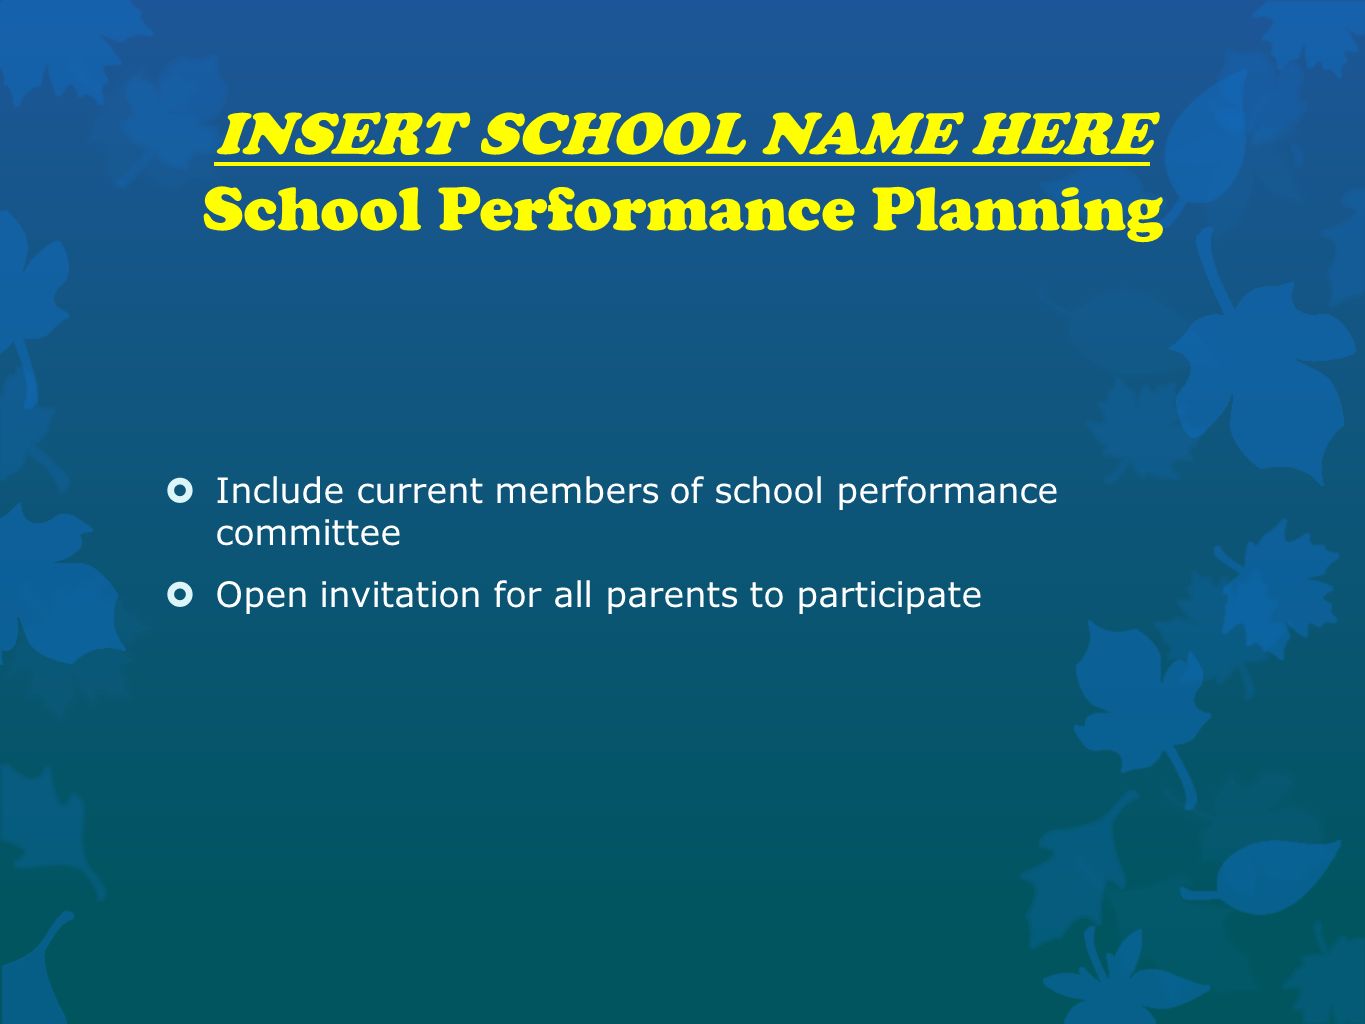 INSERT SCHOOL NAME HERE School Performance Planning